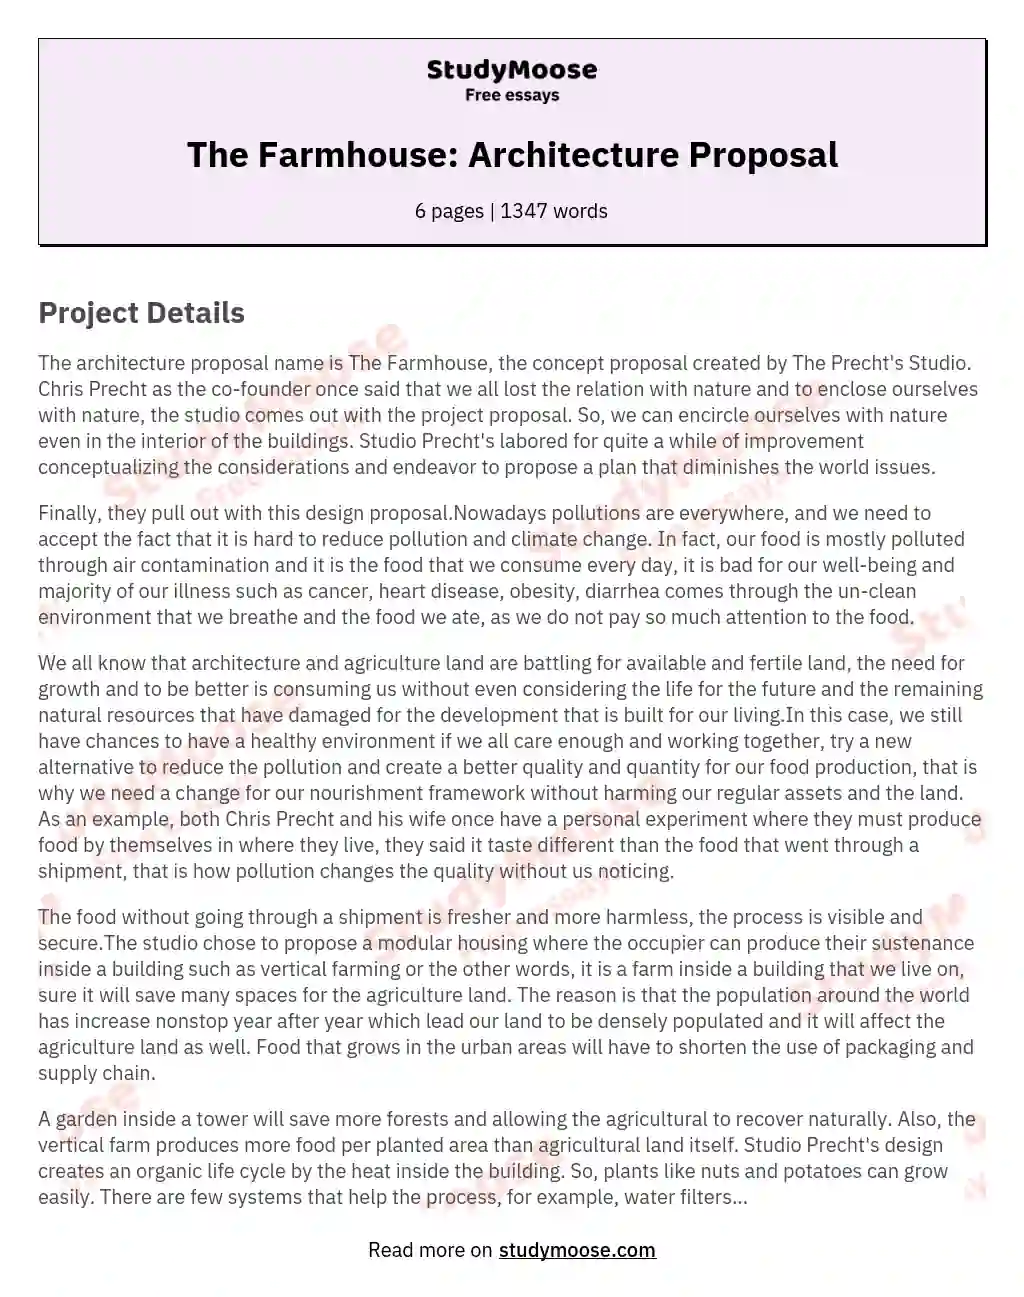 The Farmhouse: Architecture Proposal essay